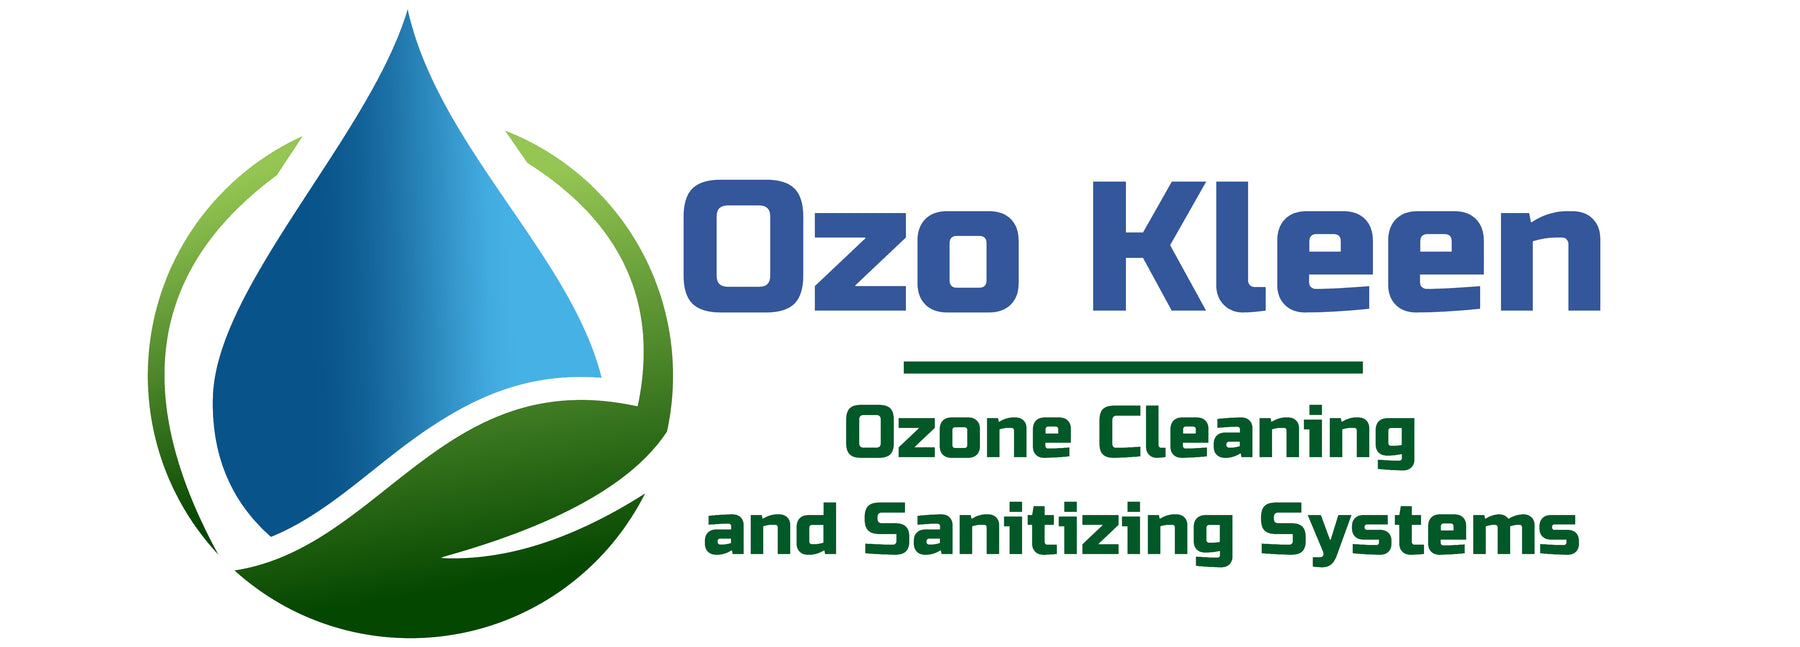 Ozo Kleen ozone sanitation equipment and cleaners